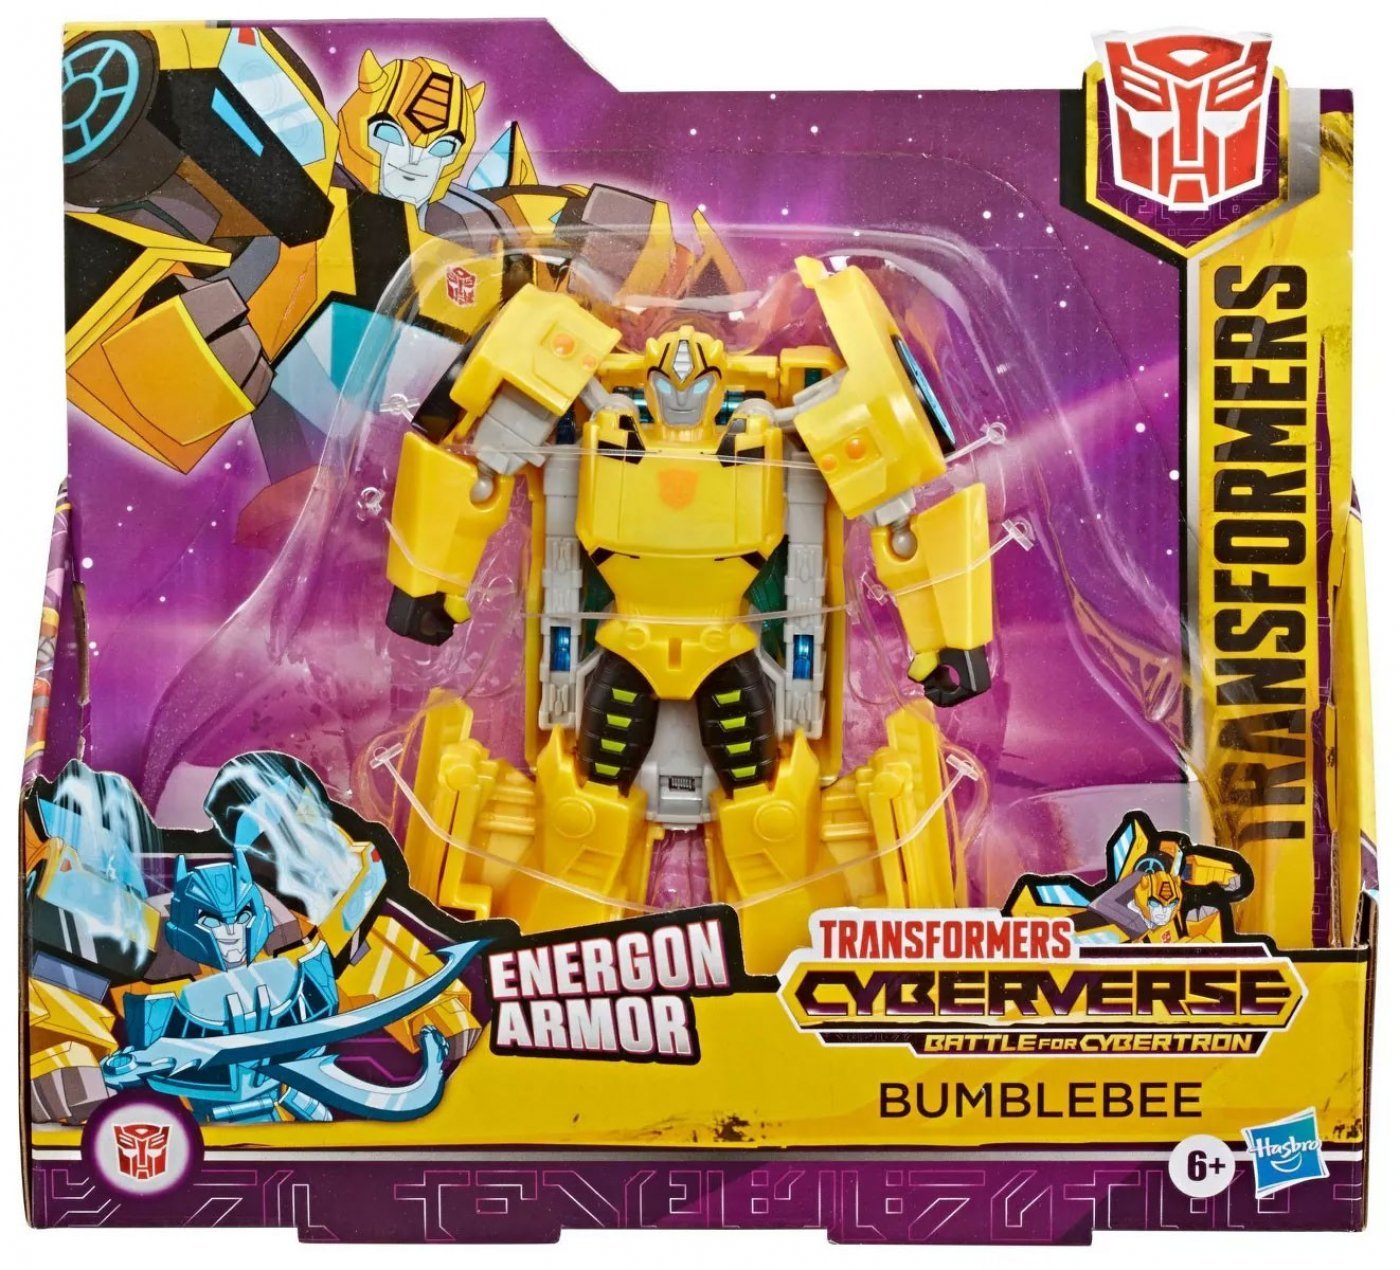 Transformers Cyberverse Bumblebee Hasbro Energon Armor  (SIN STOCK)